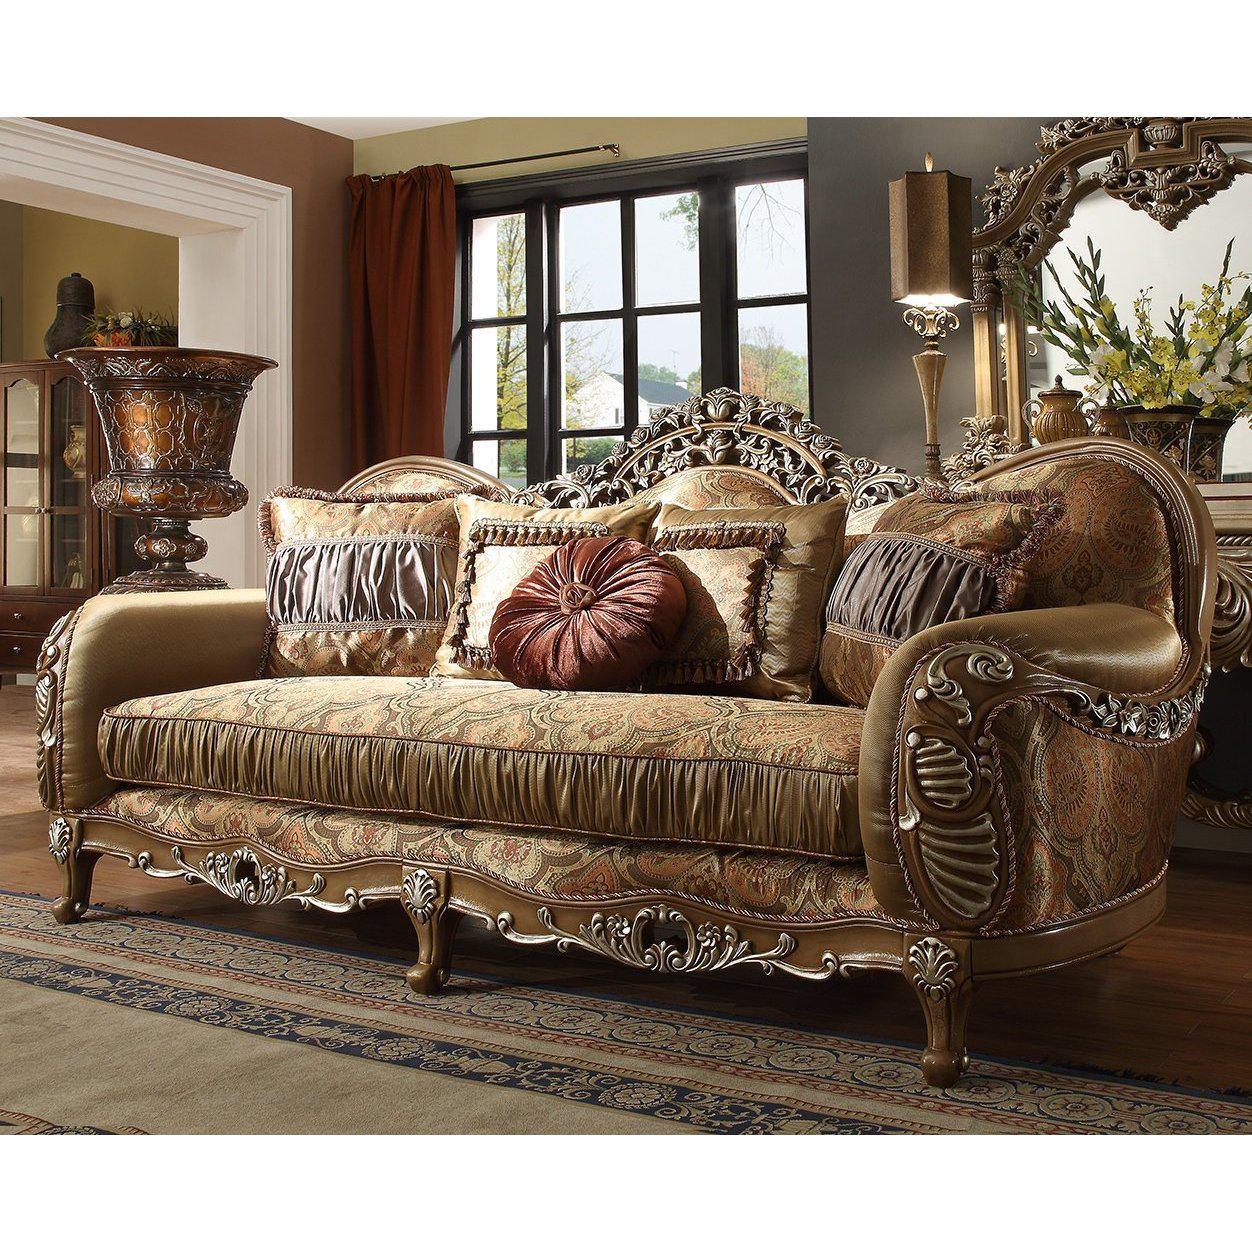 Homey Design Luxury Hd-622 - Sofa-Iron Home Concepts